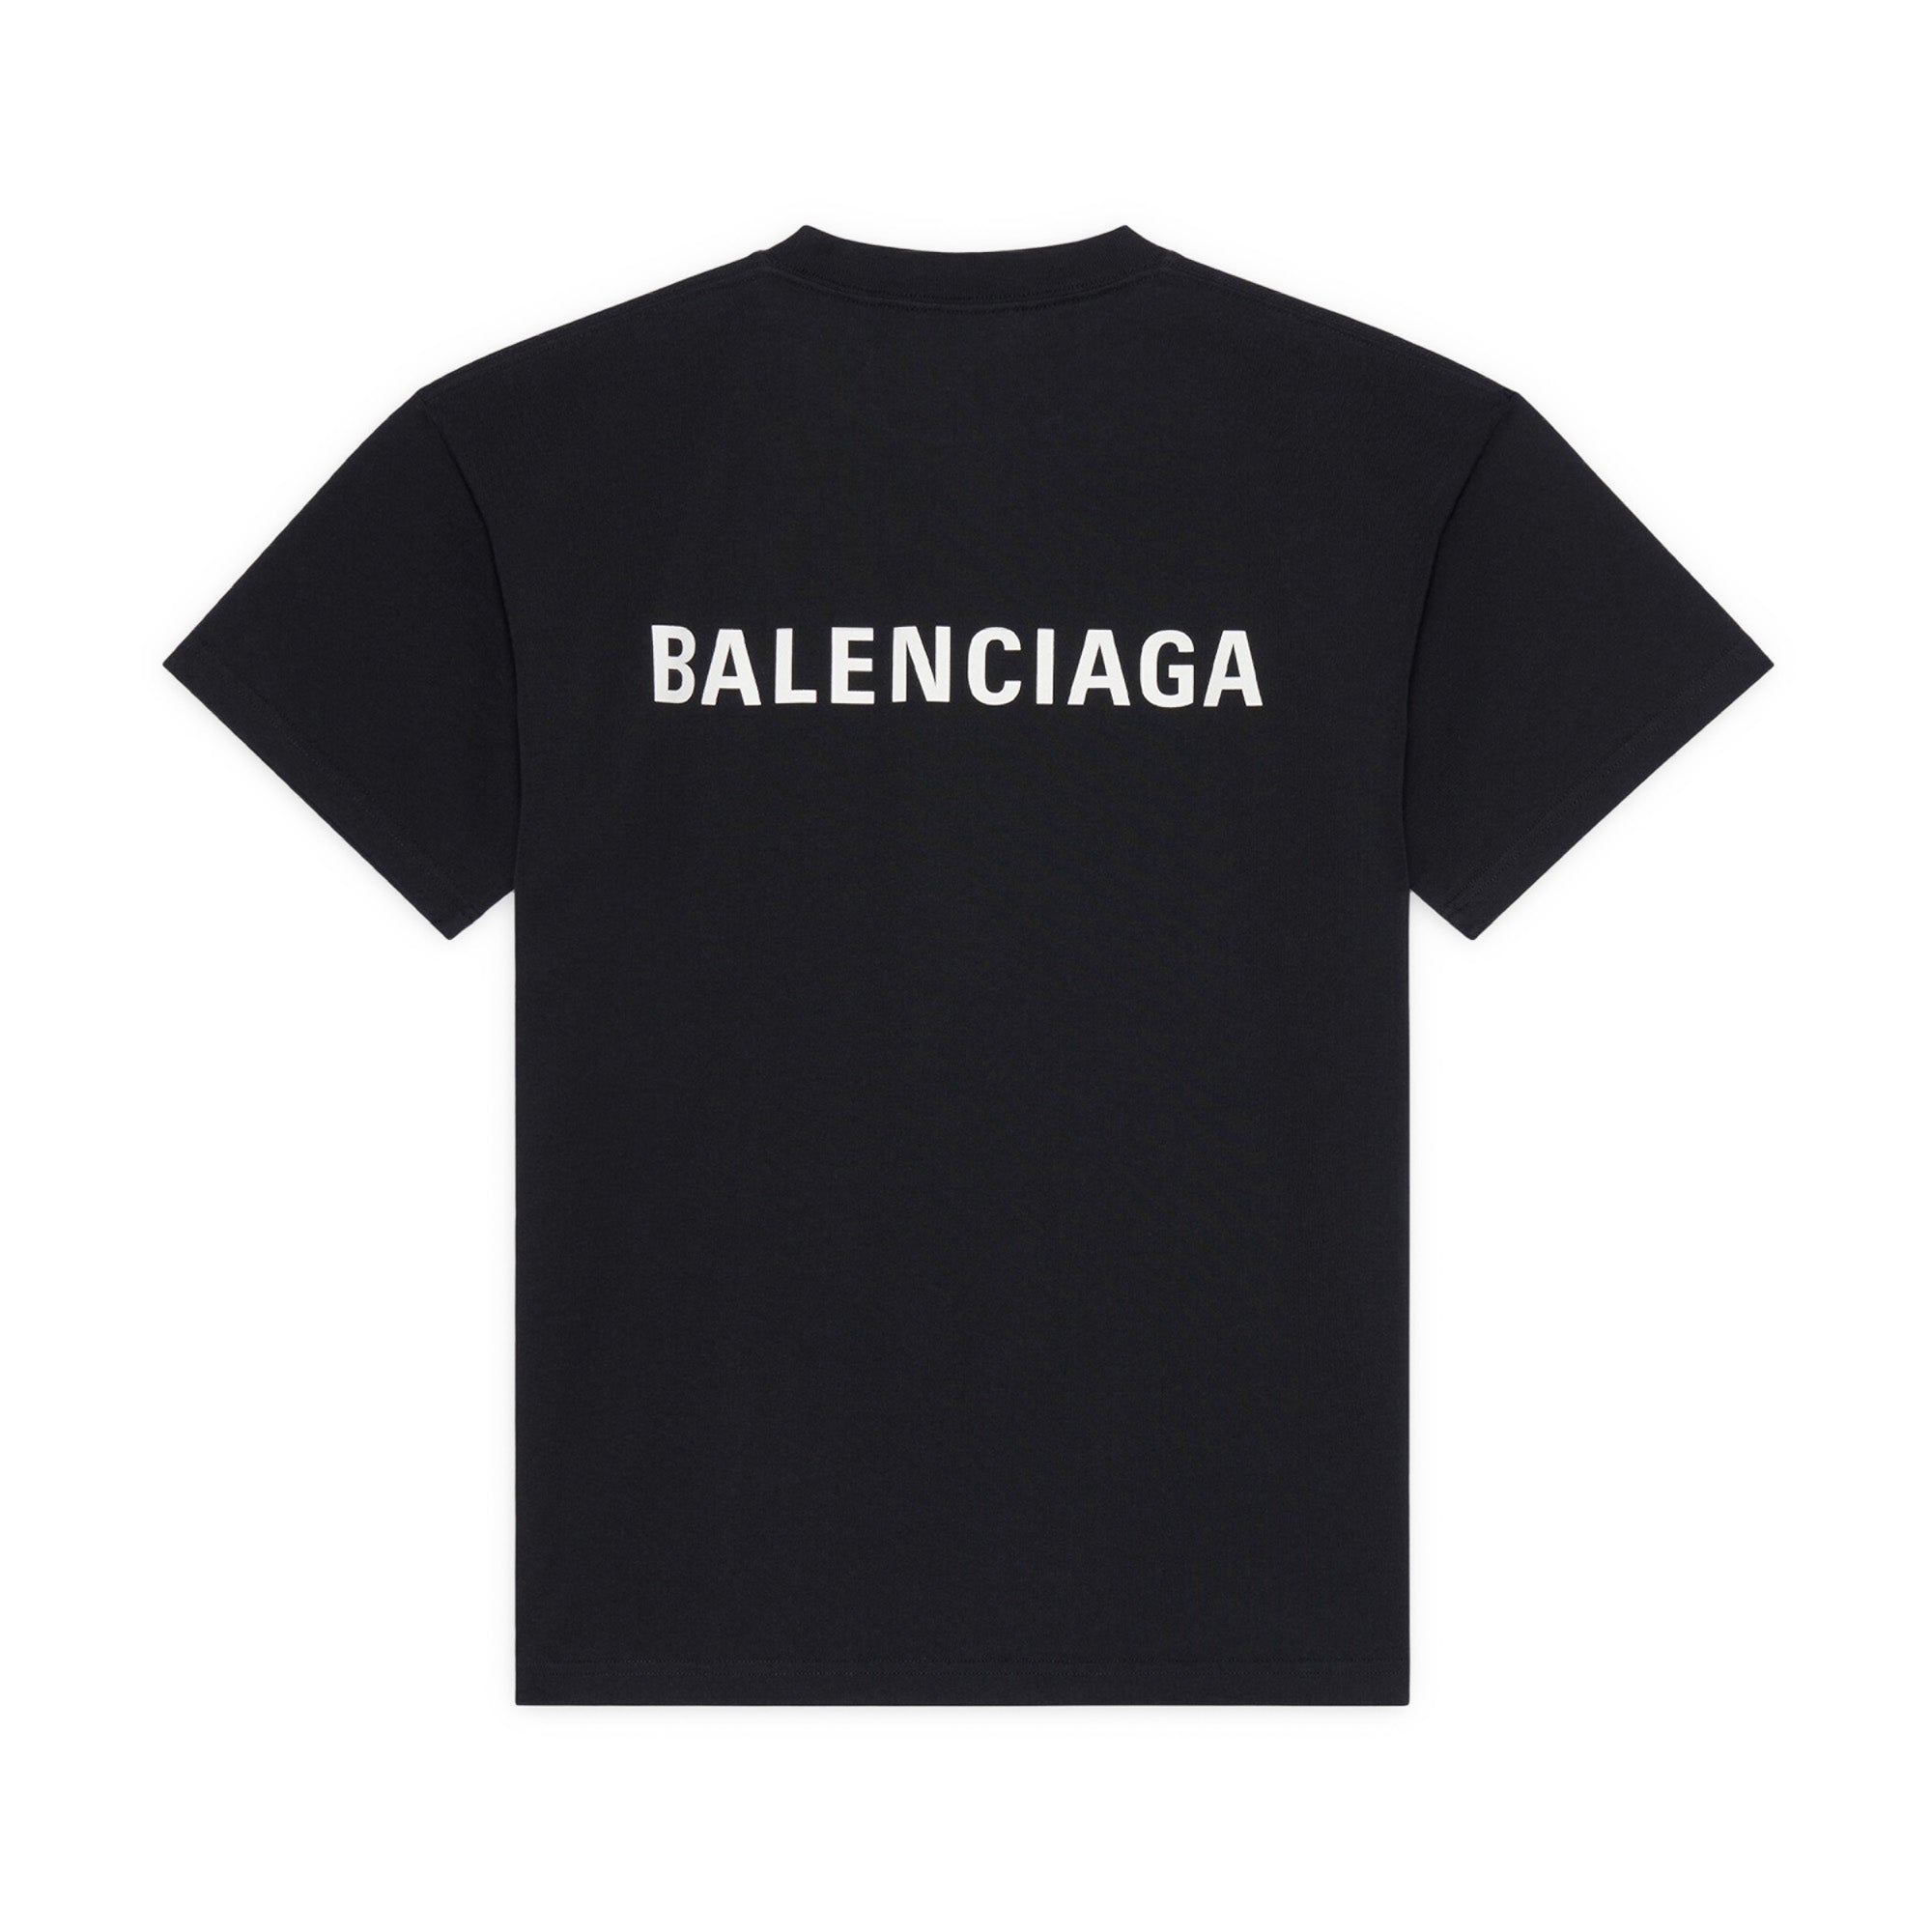 BALENCIAGA tshirt for women  Fuchsia  Balenciaga tshirt 641655TKVJ1  online on GIGLIOCOM